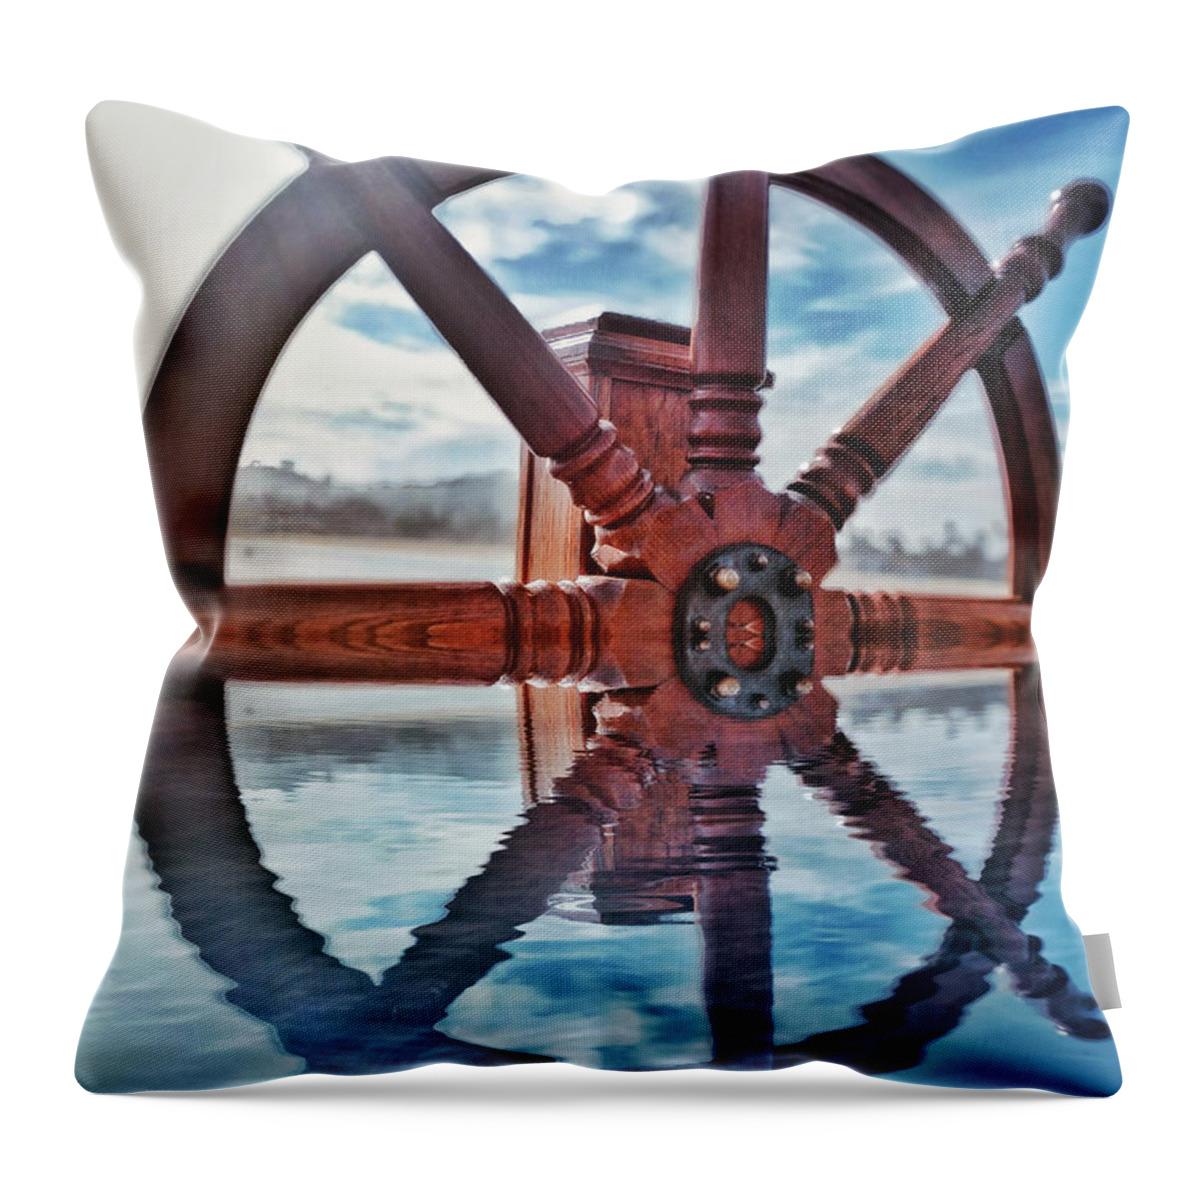 Sailing Throw Pillow featuring the photograph Ship Wheel by David Zumsteg